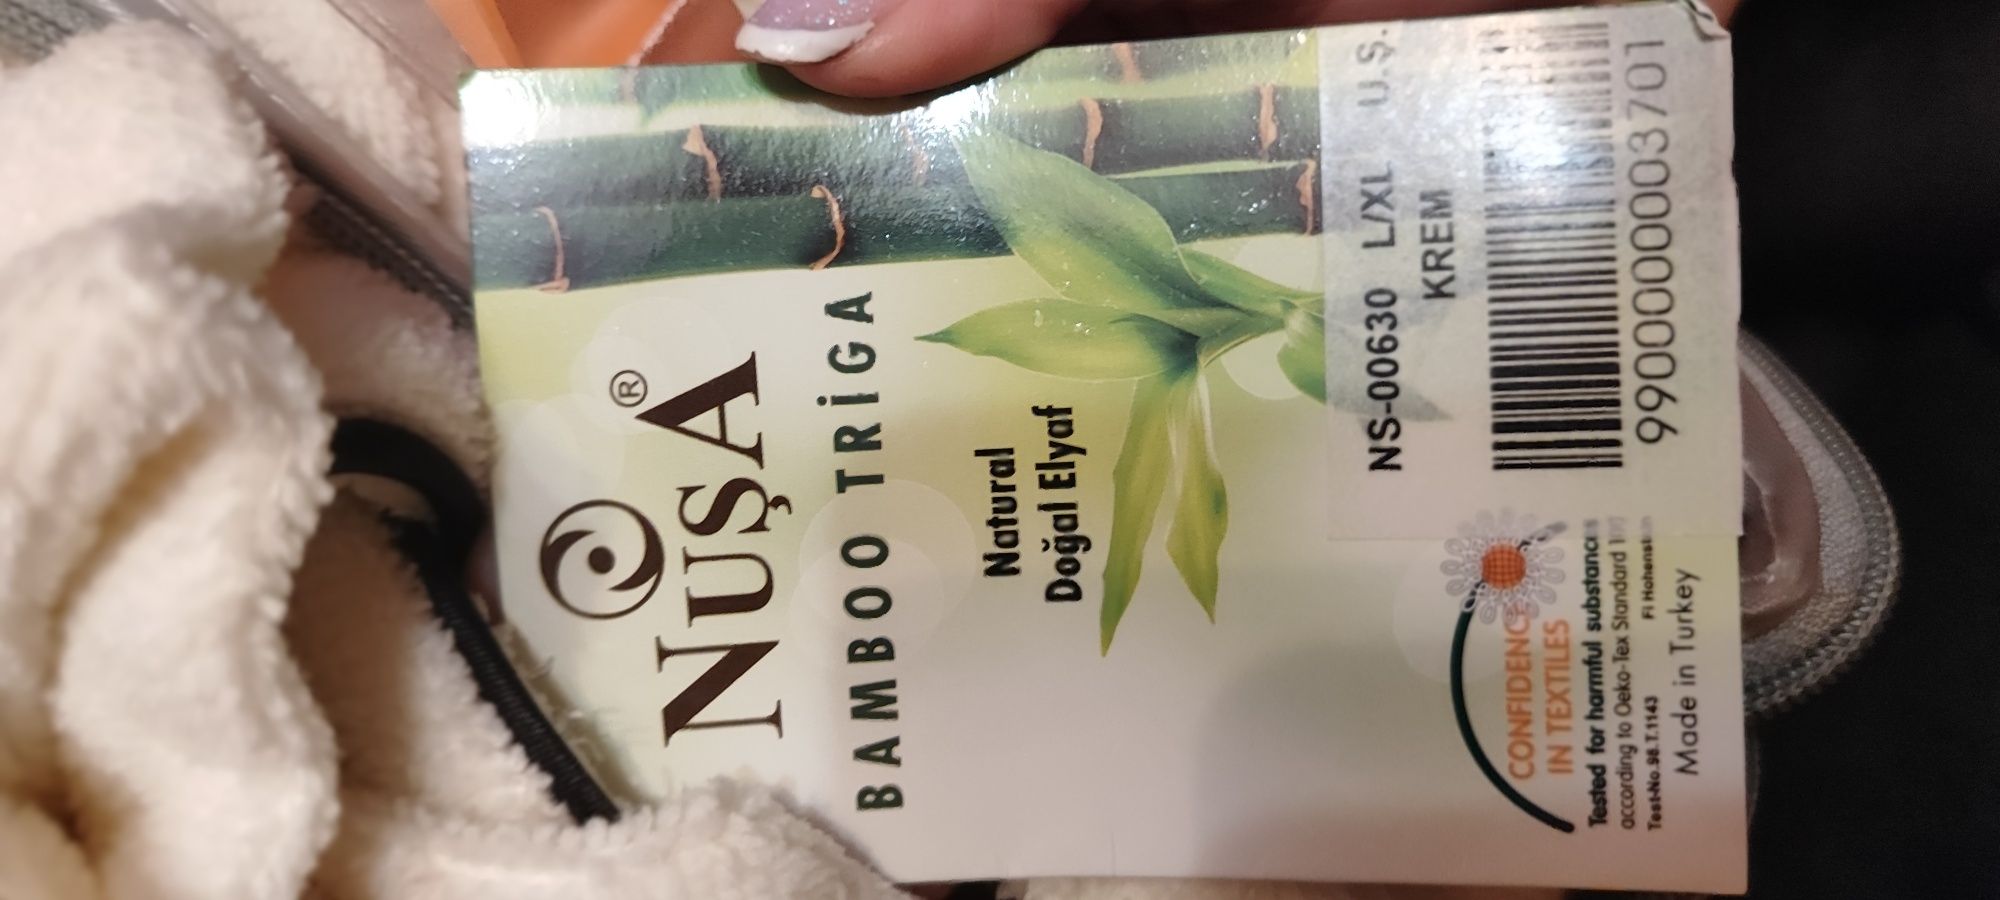 Nusa bamboo  халат натуральный L/Xl